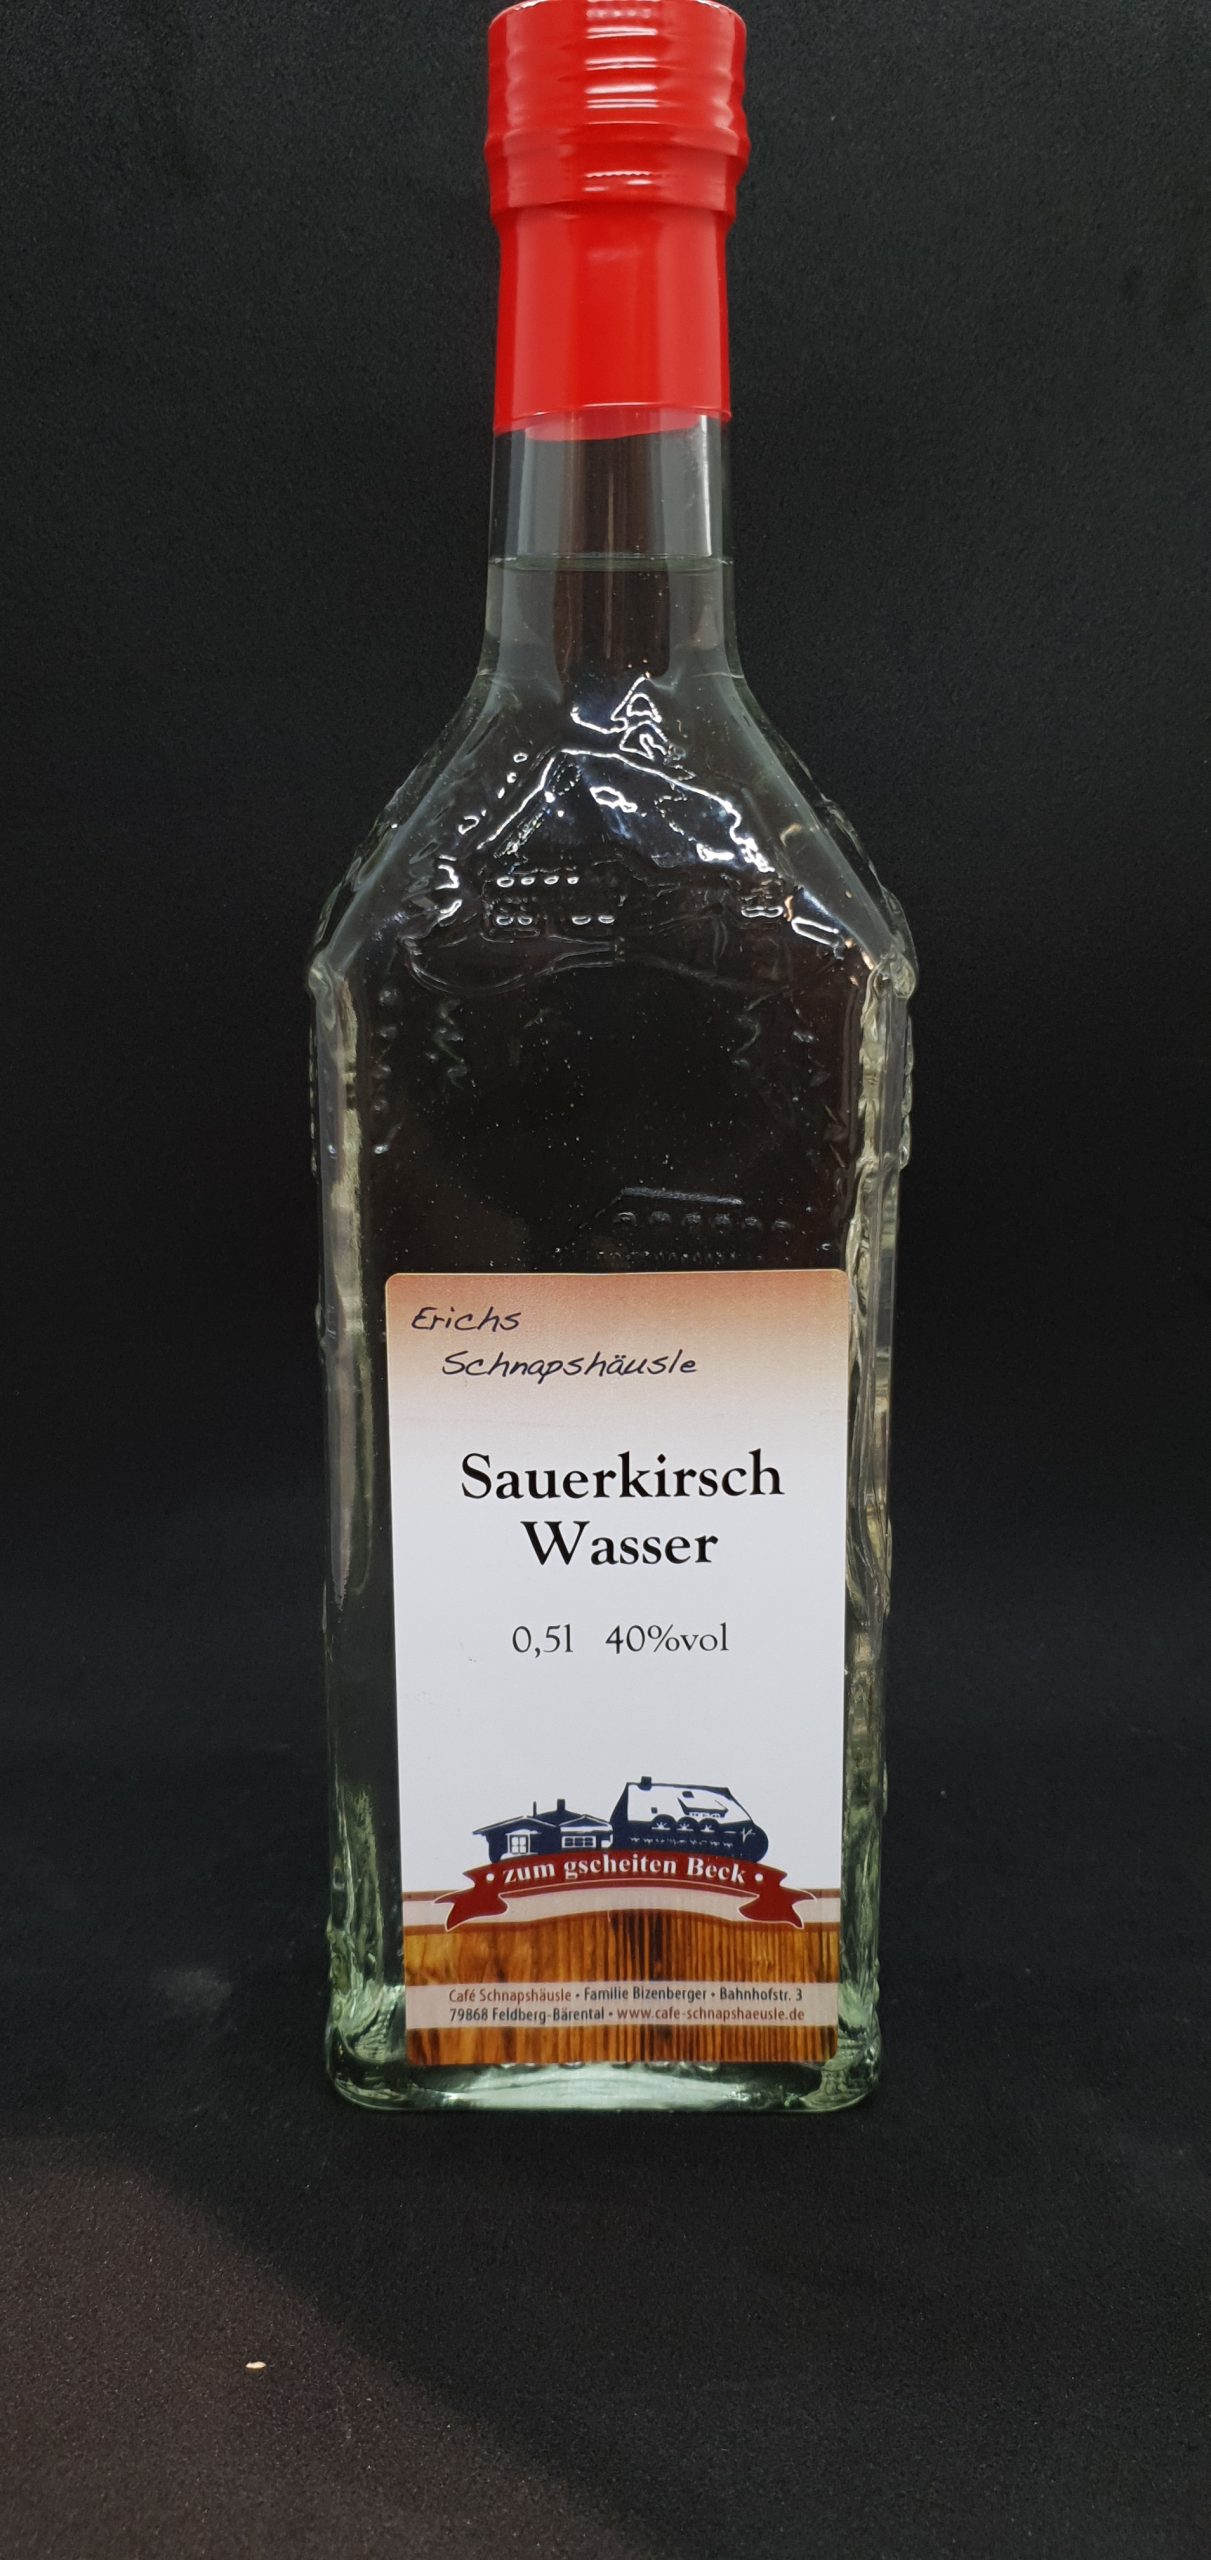 Sauerkirsch Wasser – Zum Gscheiten Beck